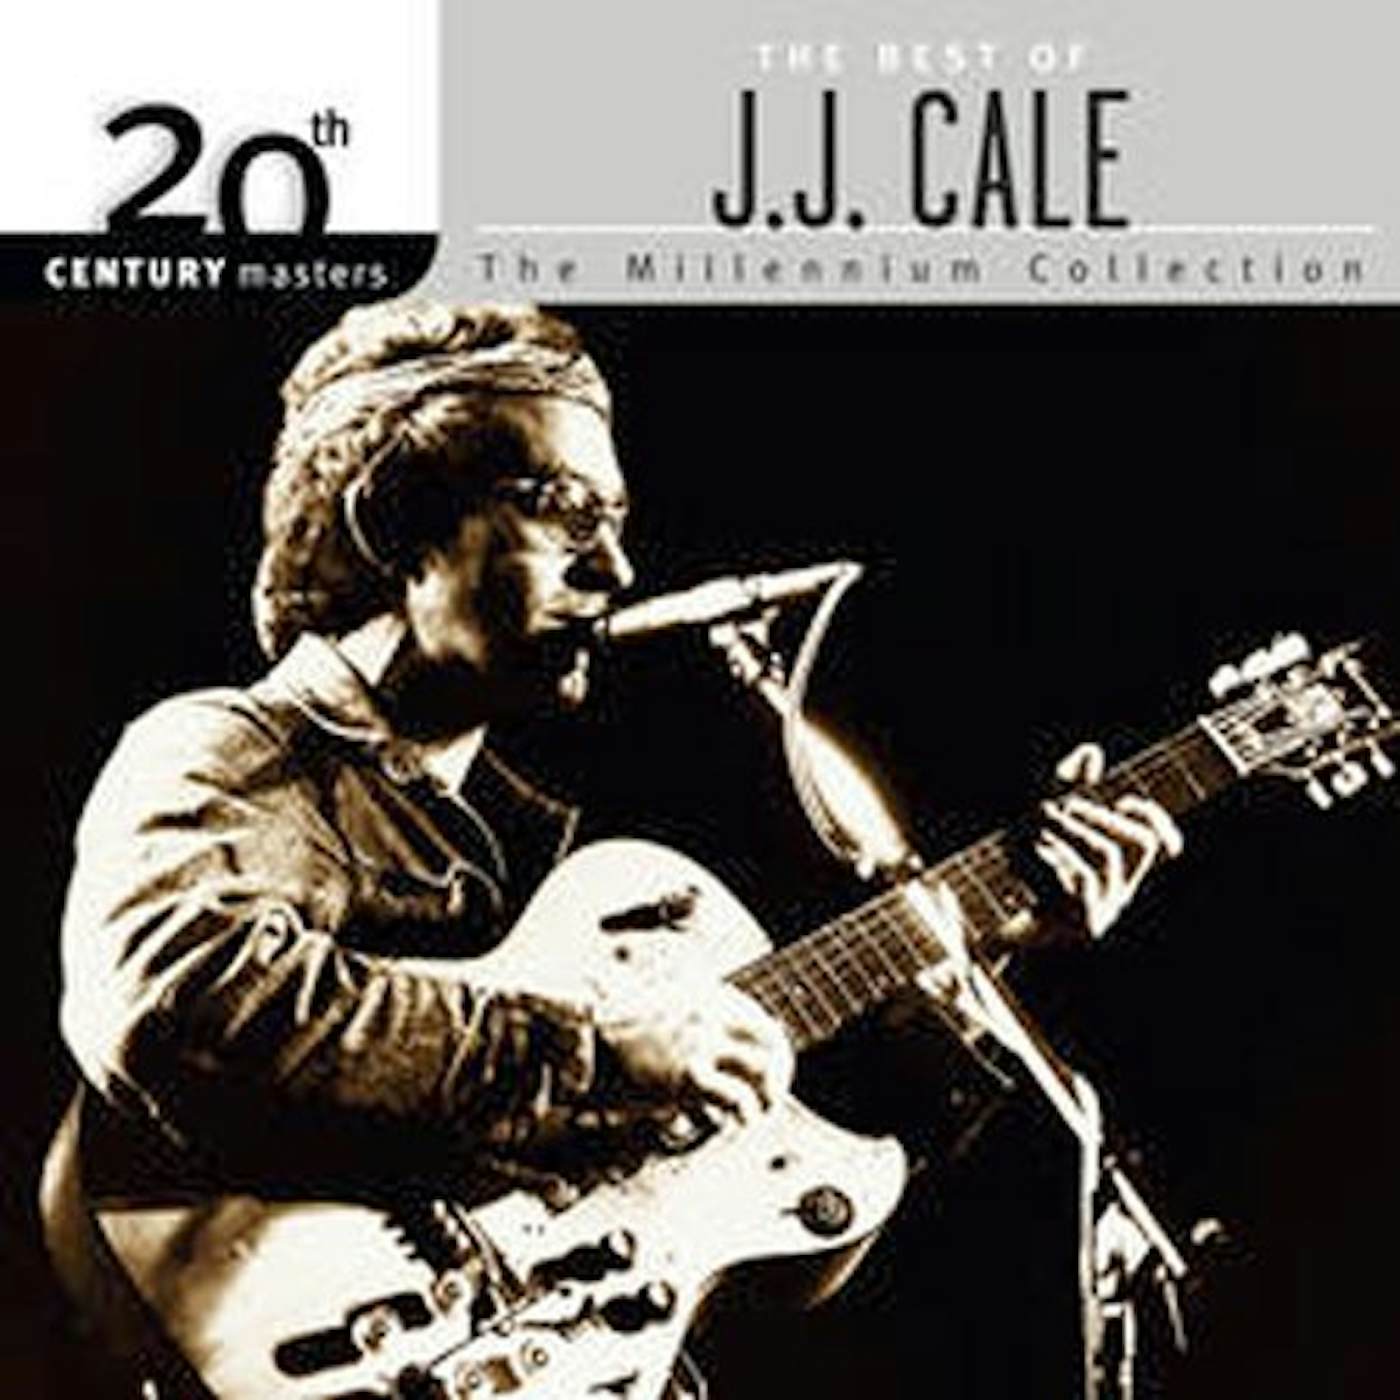 J.J. Cale 20TH CENTURY MASTERS: MILLENNIUM COLLECTION CD